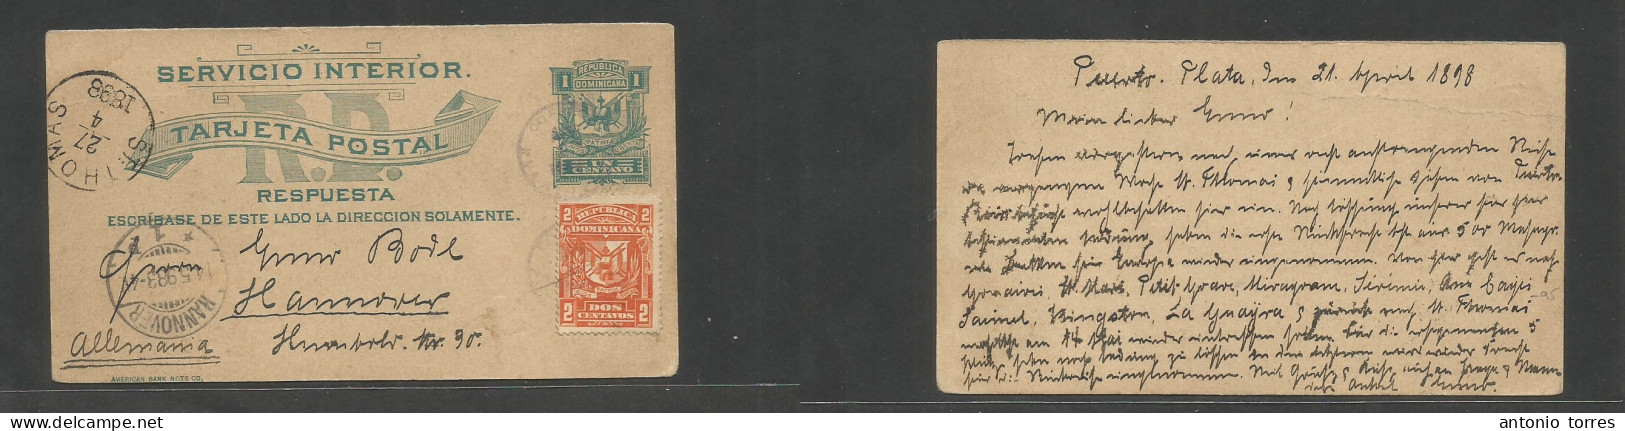 Dominican Rep. 1898 (21 April) Reply Half Usage, Puerto Plata - Germany, Hannover (4 May) Via St. Thomas, DWI (27 April) - República Dominicana